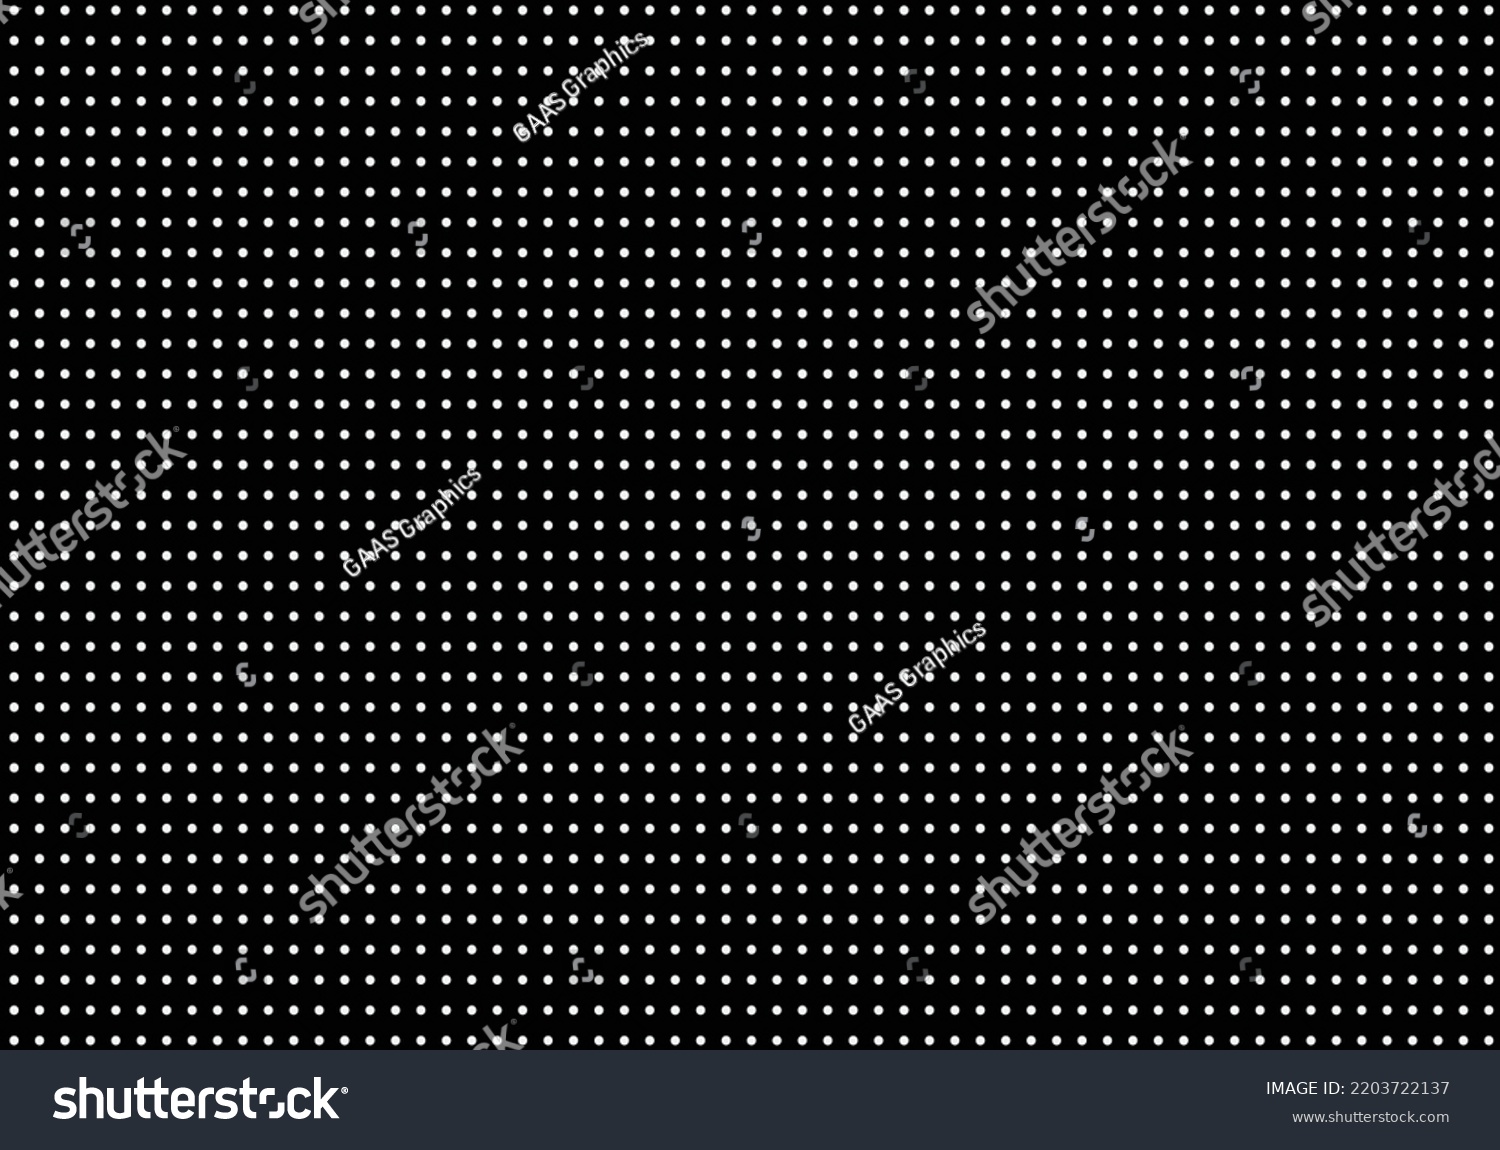 SVG of White polka dots on black background svg